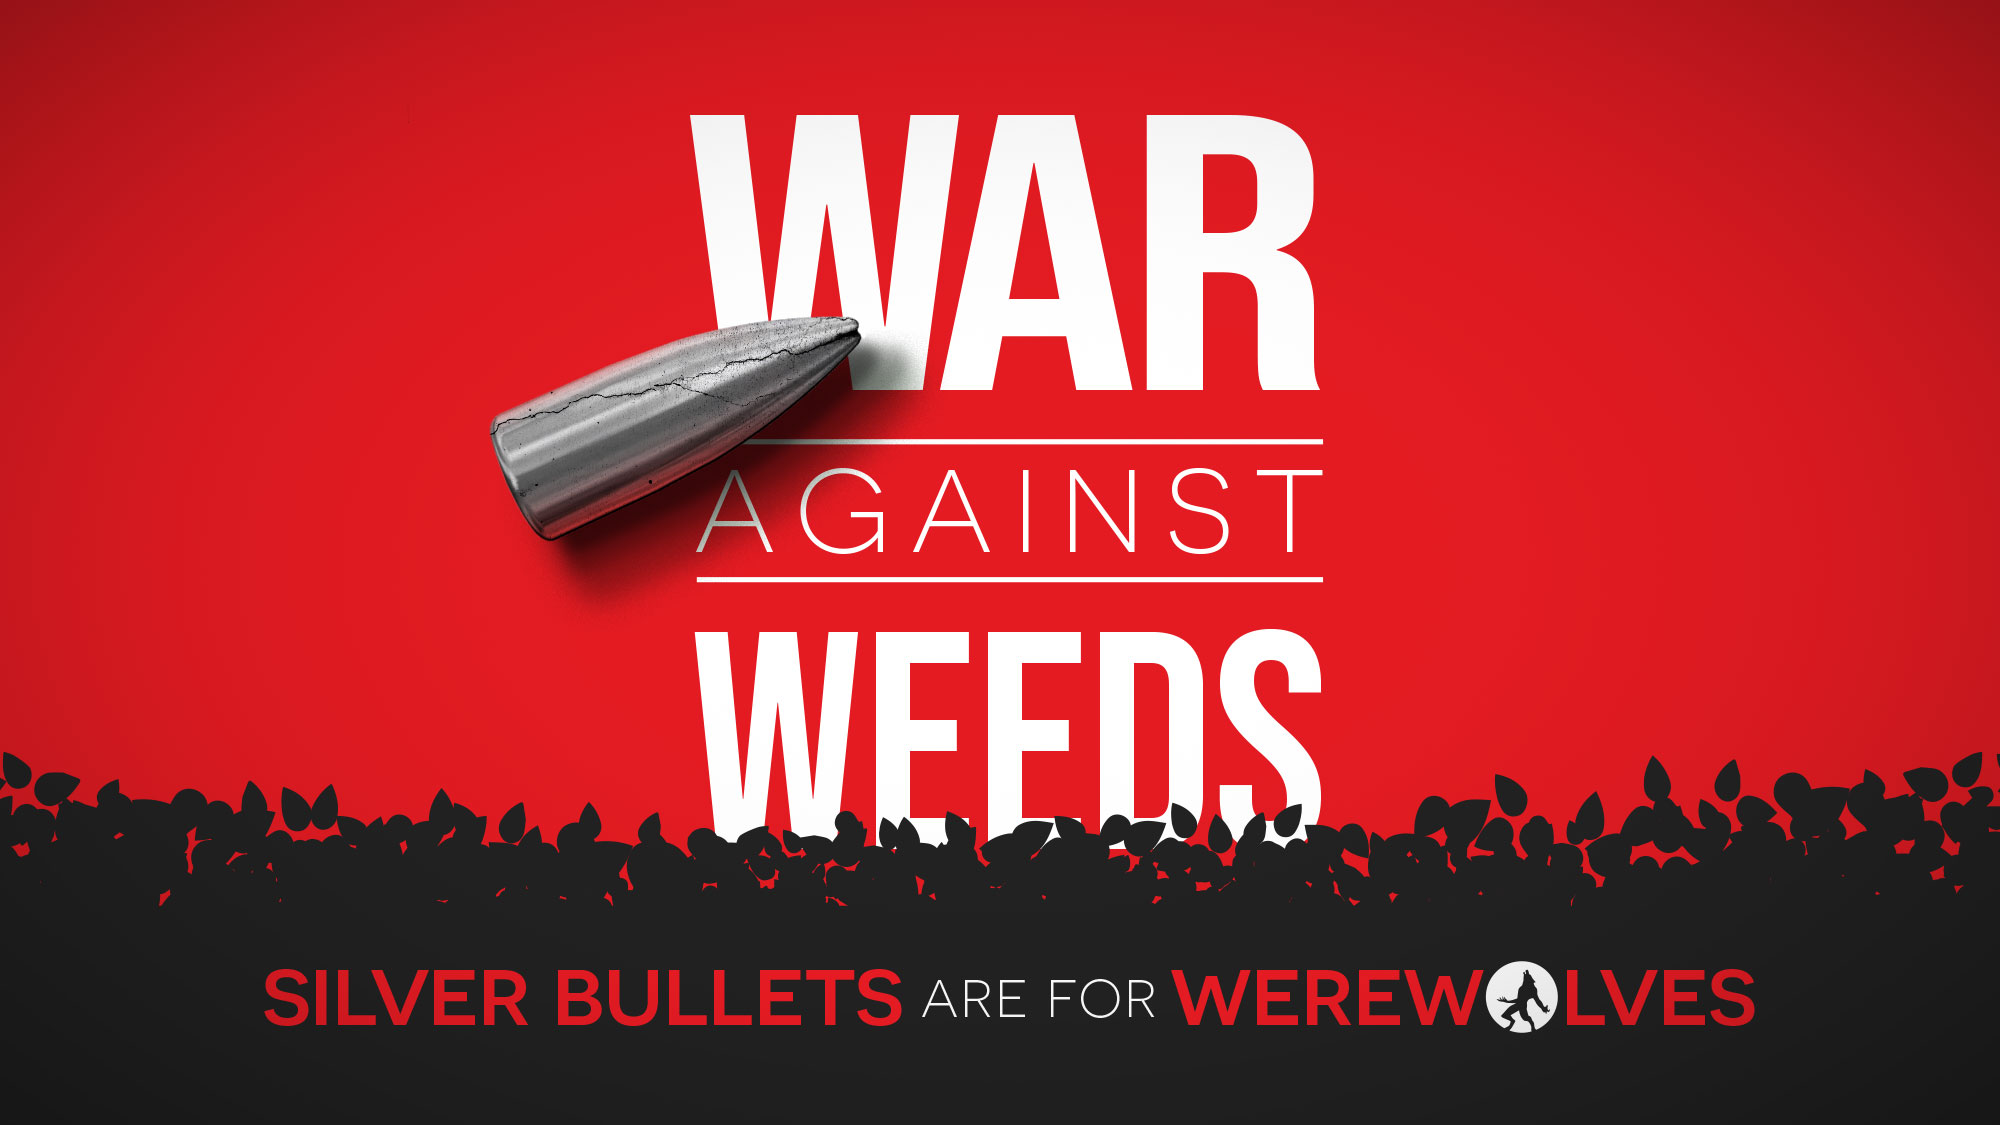 War against weeds logo